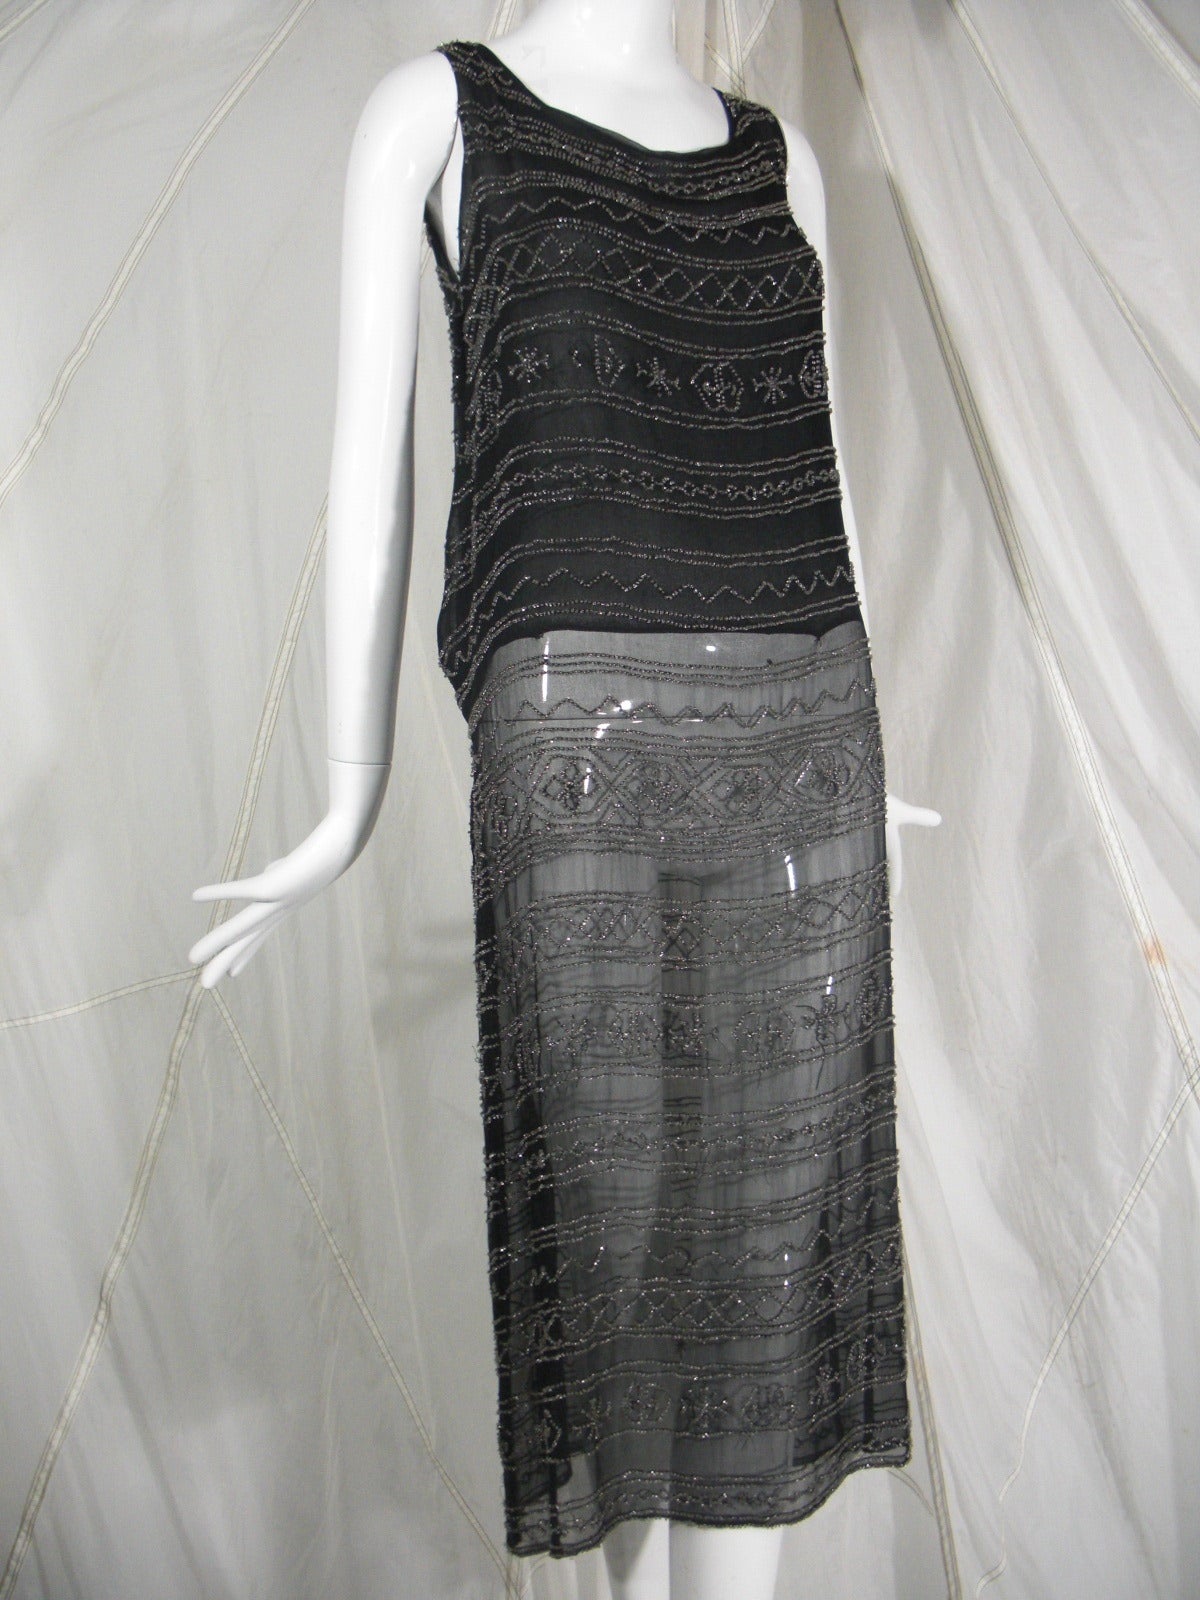 1920s Black Silk Flapper Dress with Elaborate Beading

Classic Dropped Waist Silhouette

Silk Chiffon